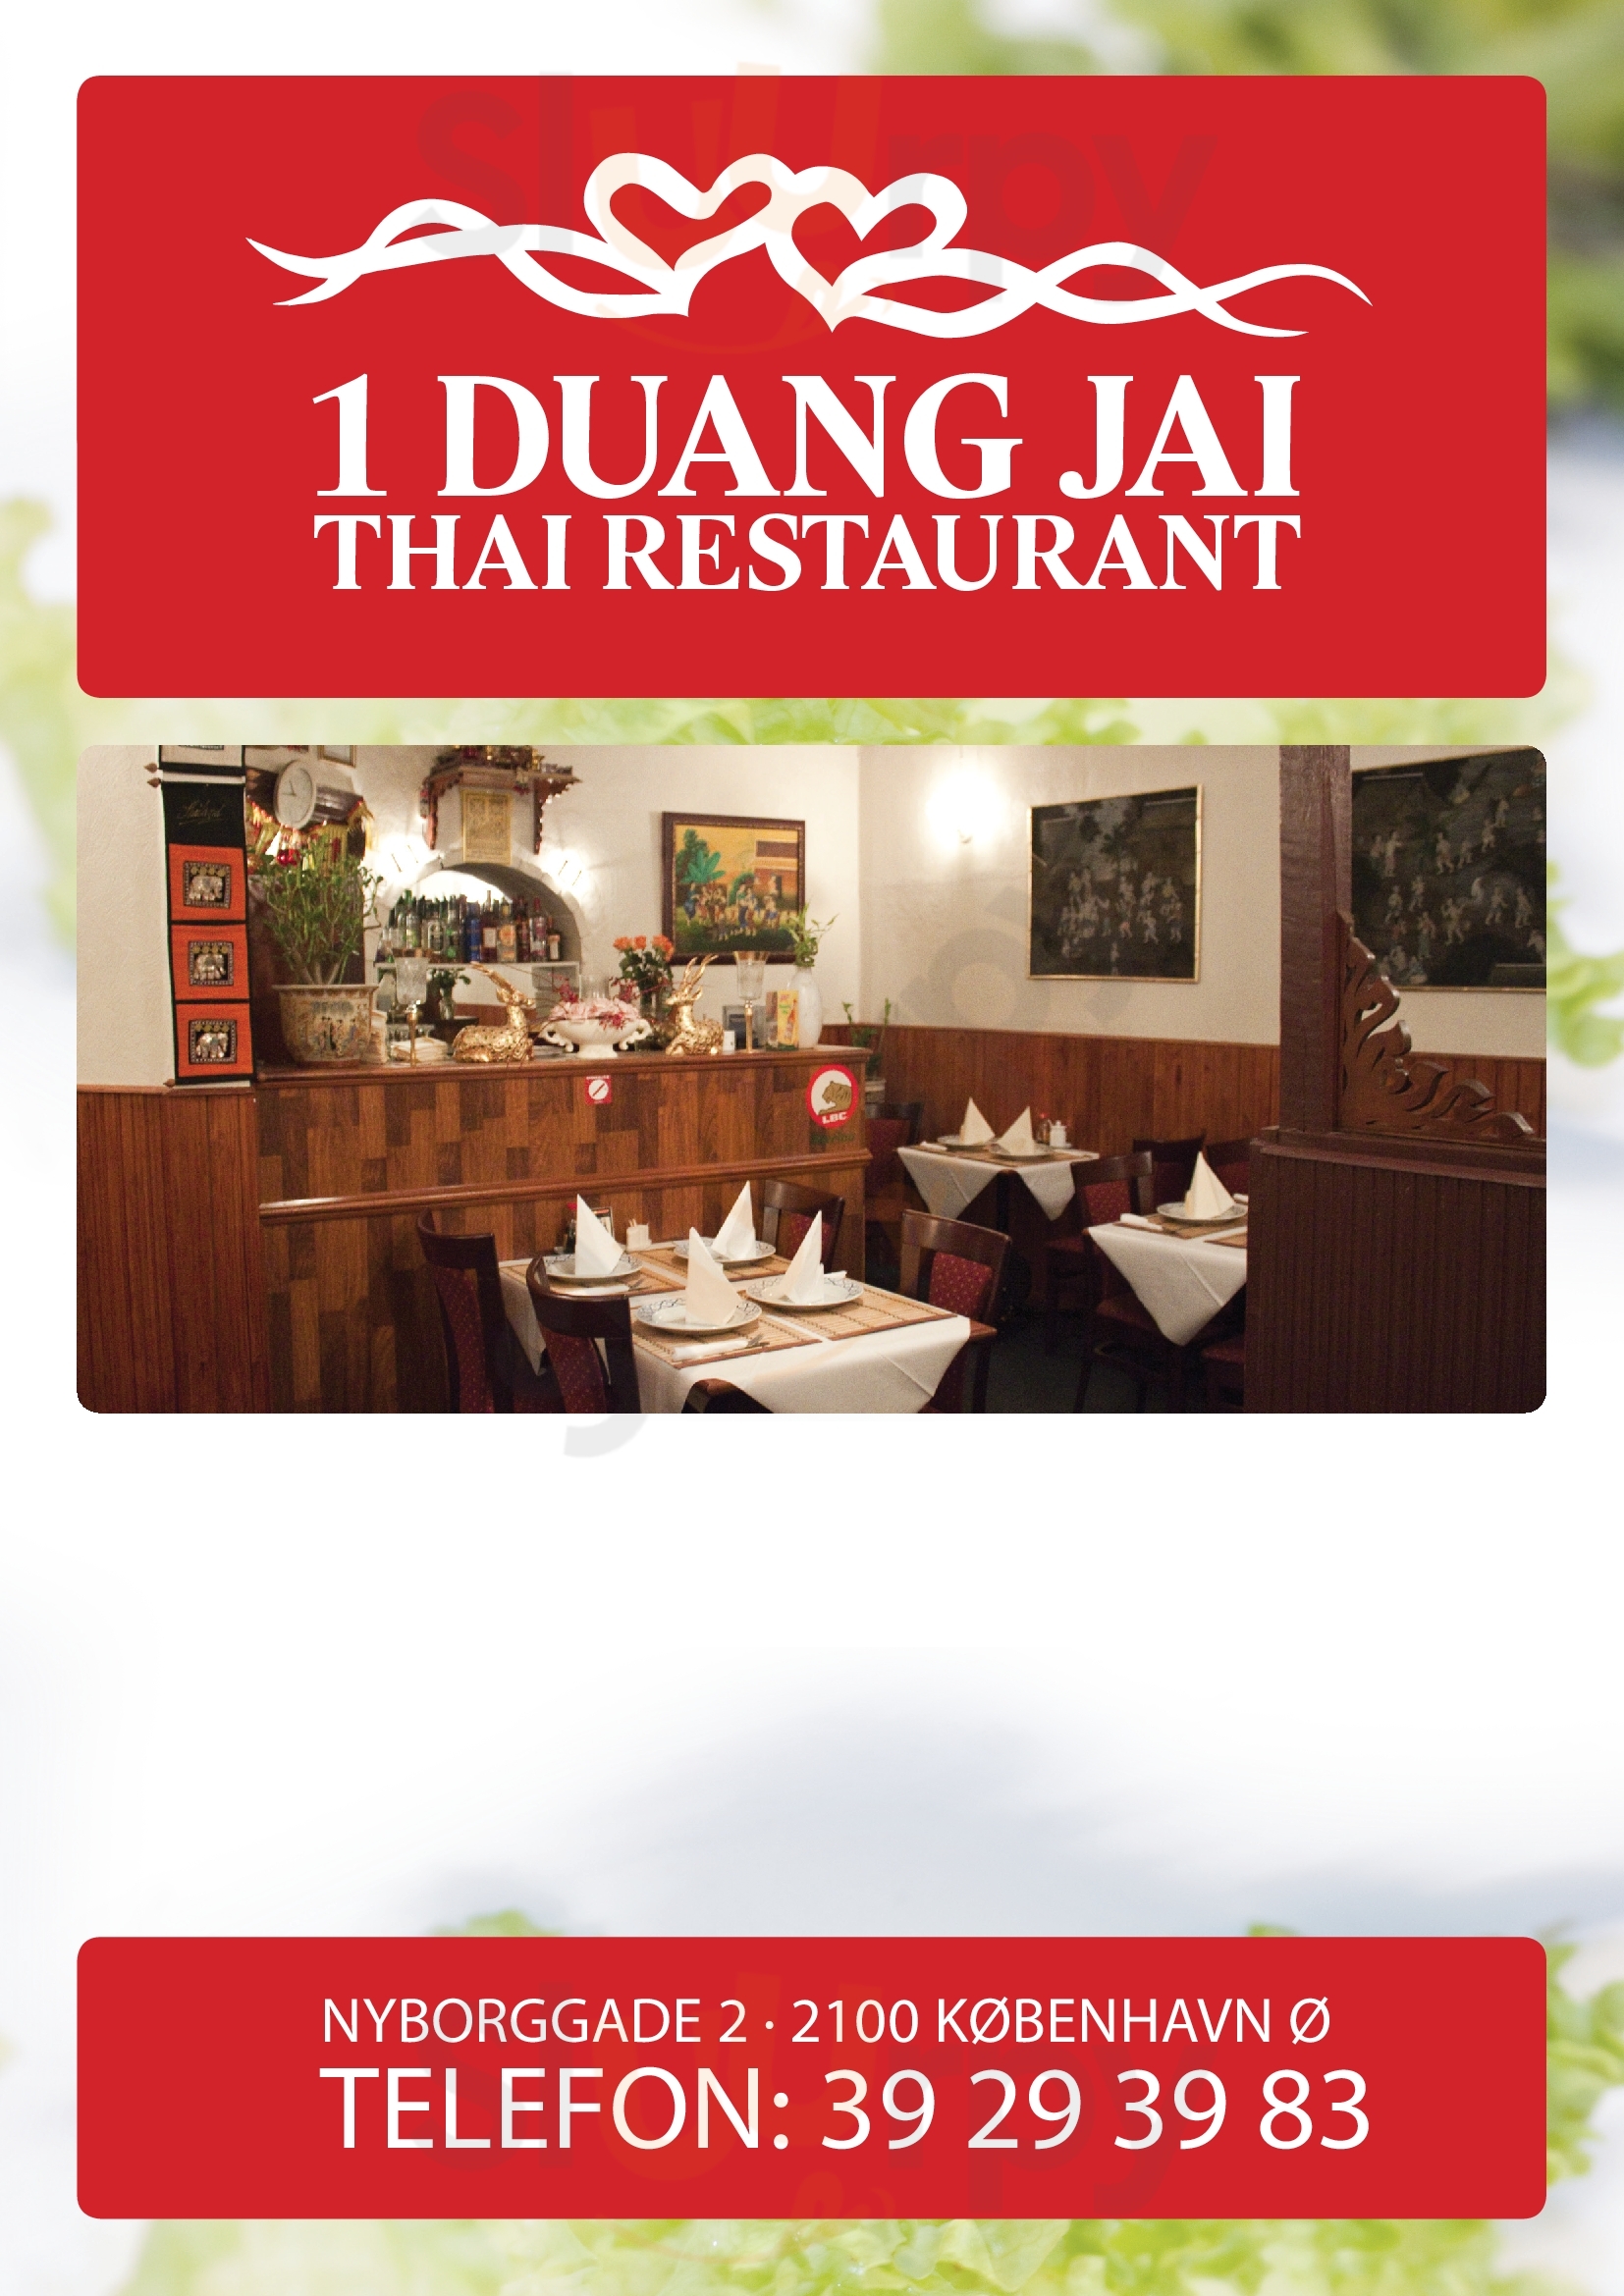 1 Duang Jai - Thai Restaurant København Menu - 1